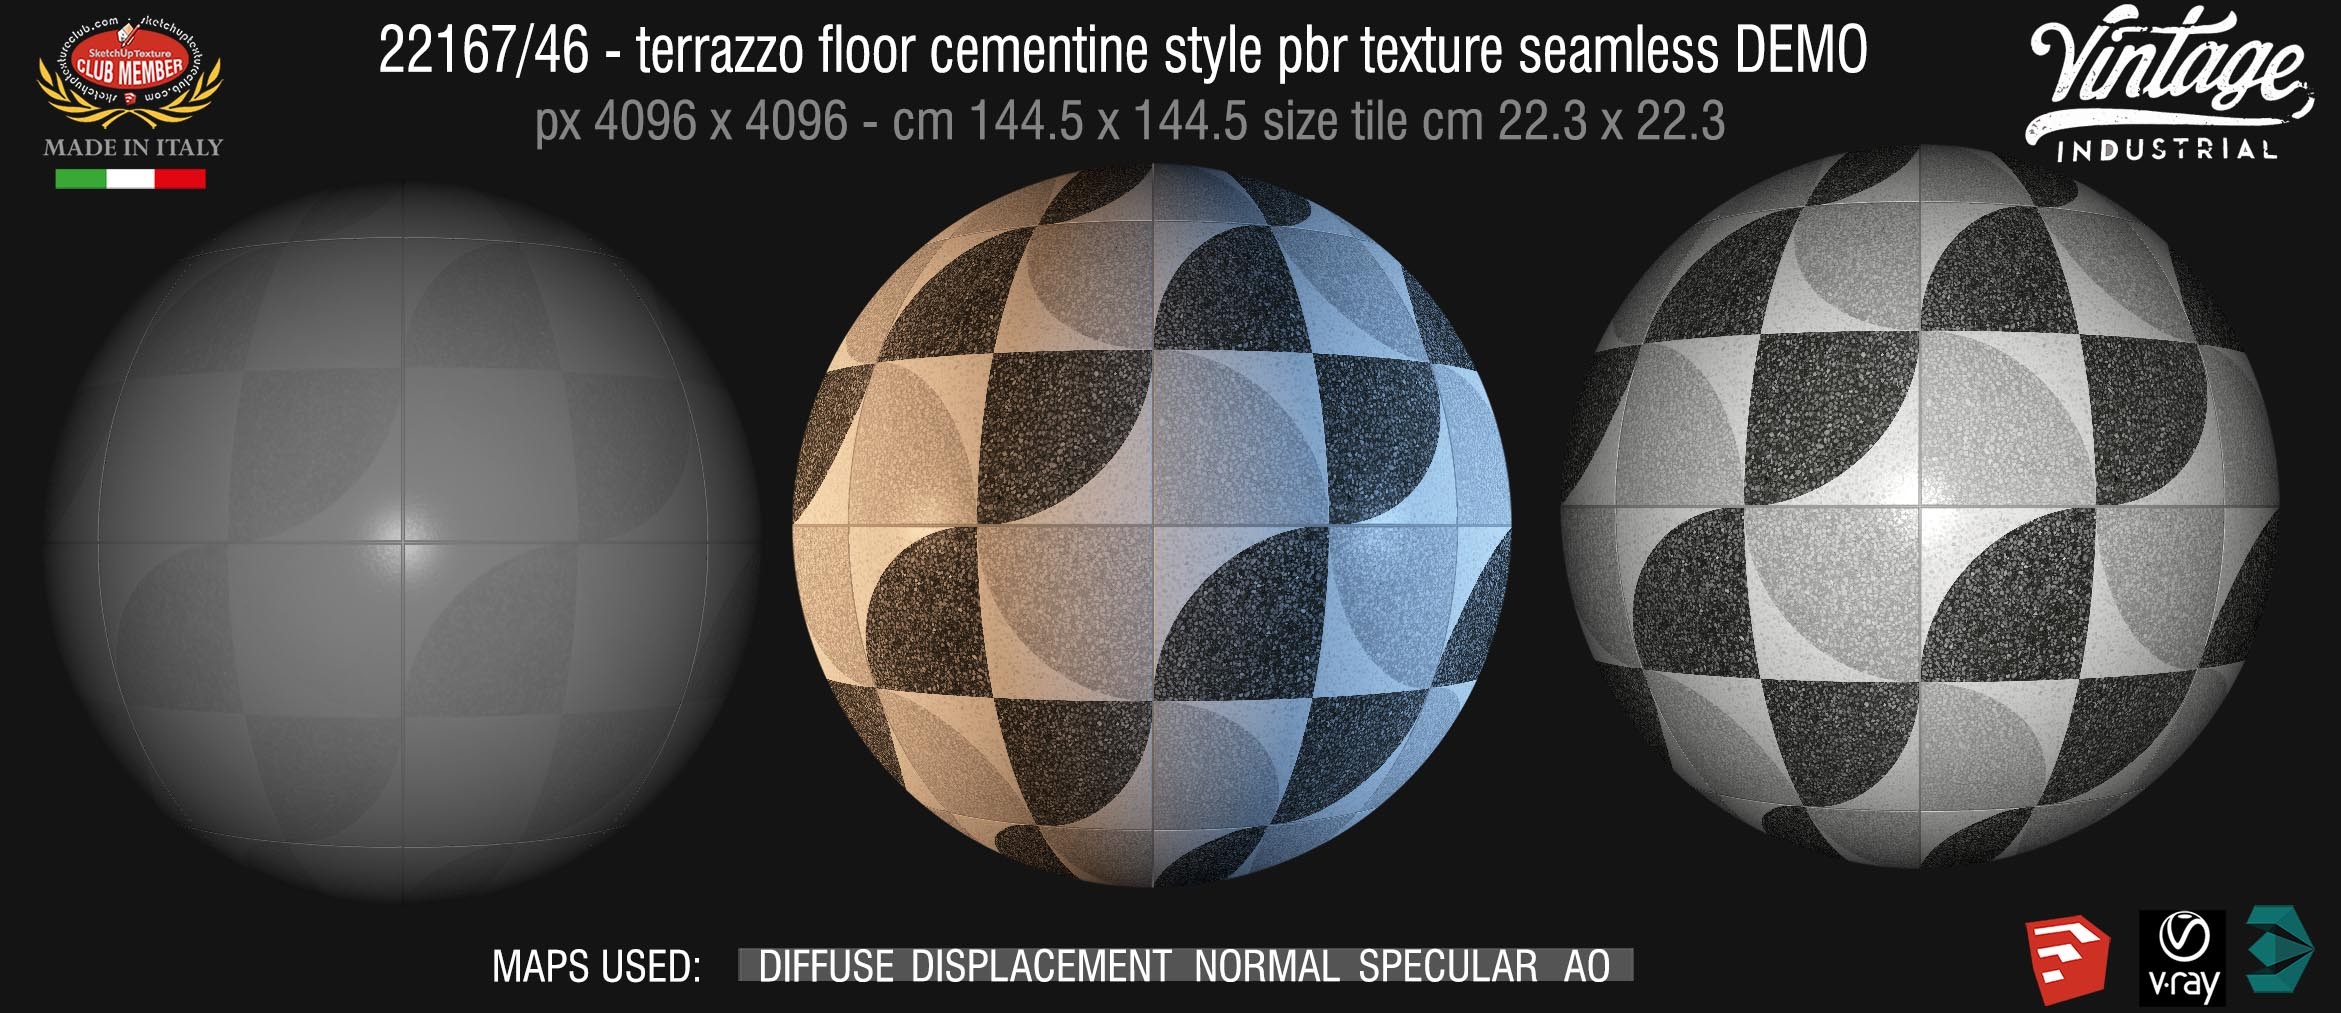 22167/46  terrazzo floor cementine style pbr texture seamless DEMO - A new range of micro-terrazzo tiles reminiscent of vintage cement tiles